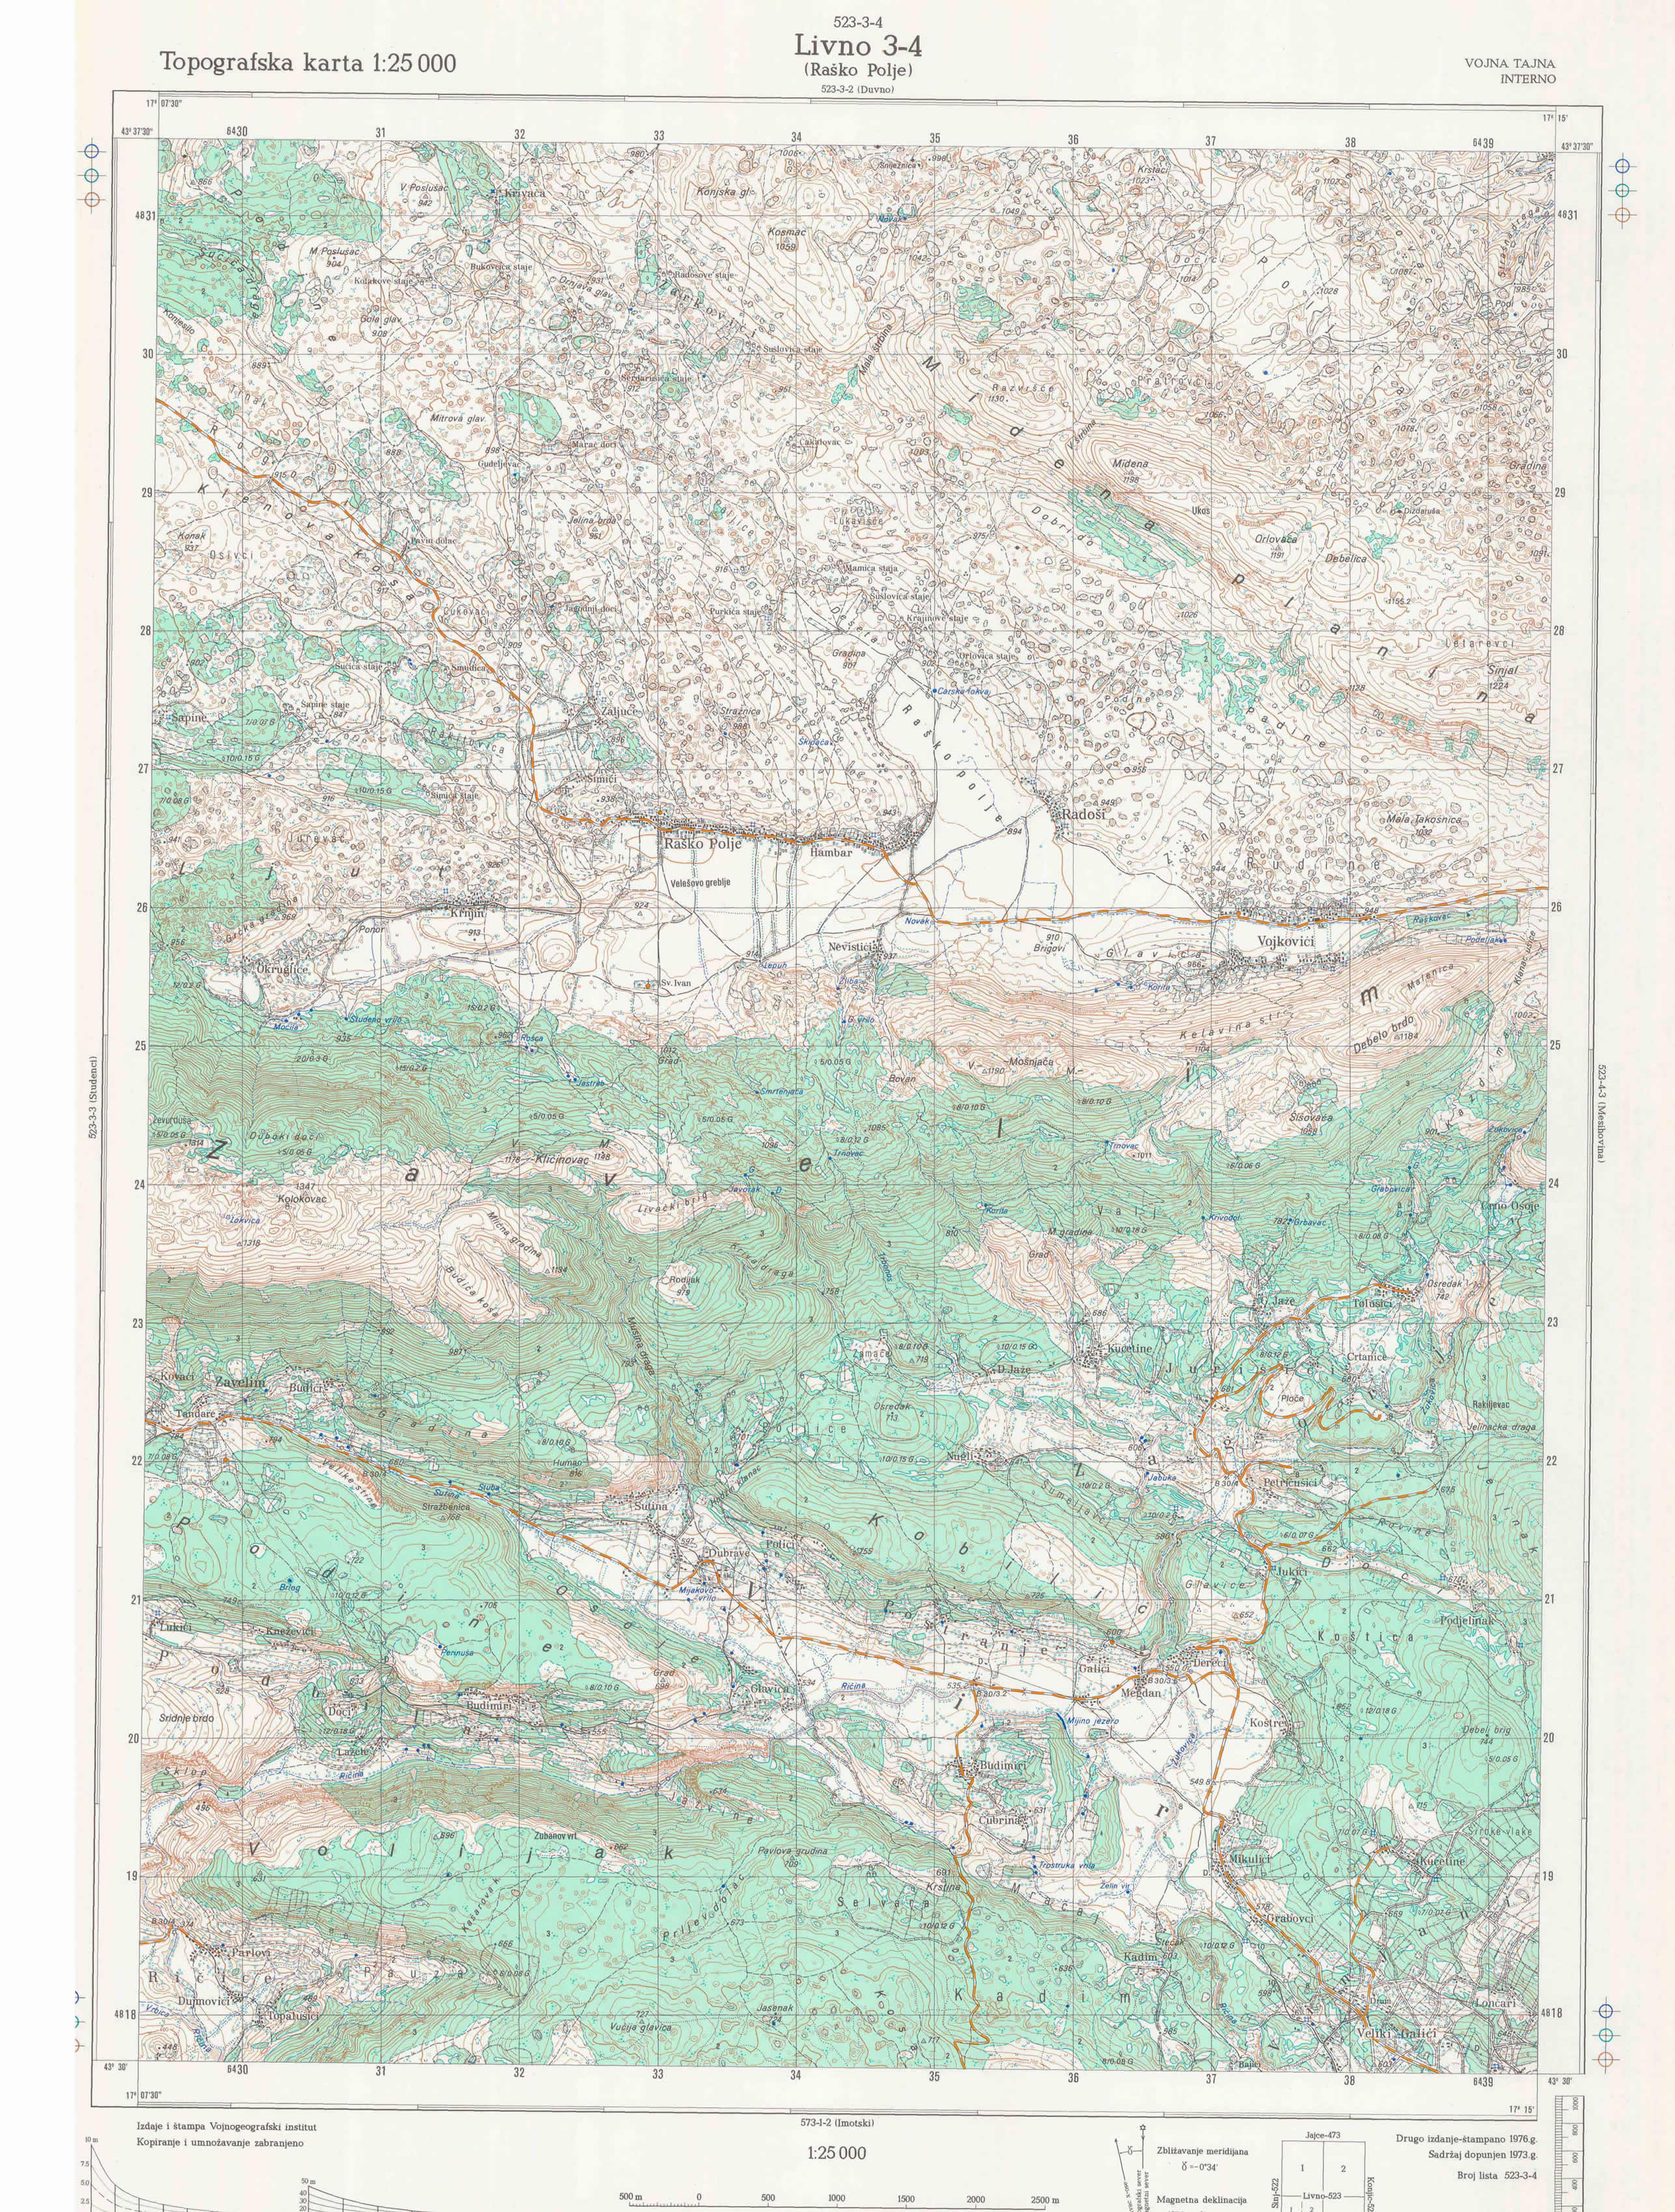  topografska karta BiH 25000 JNA  Rasko Polje